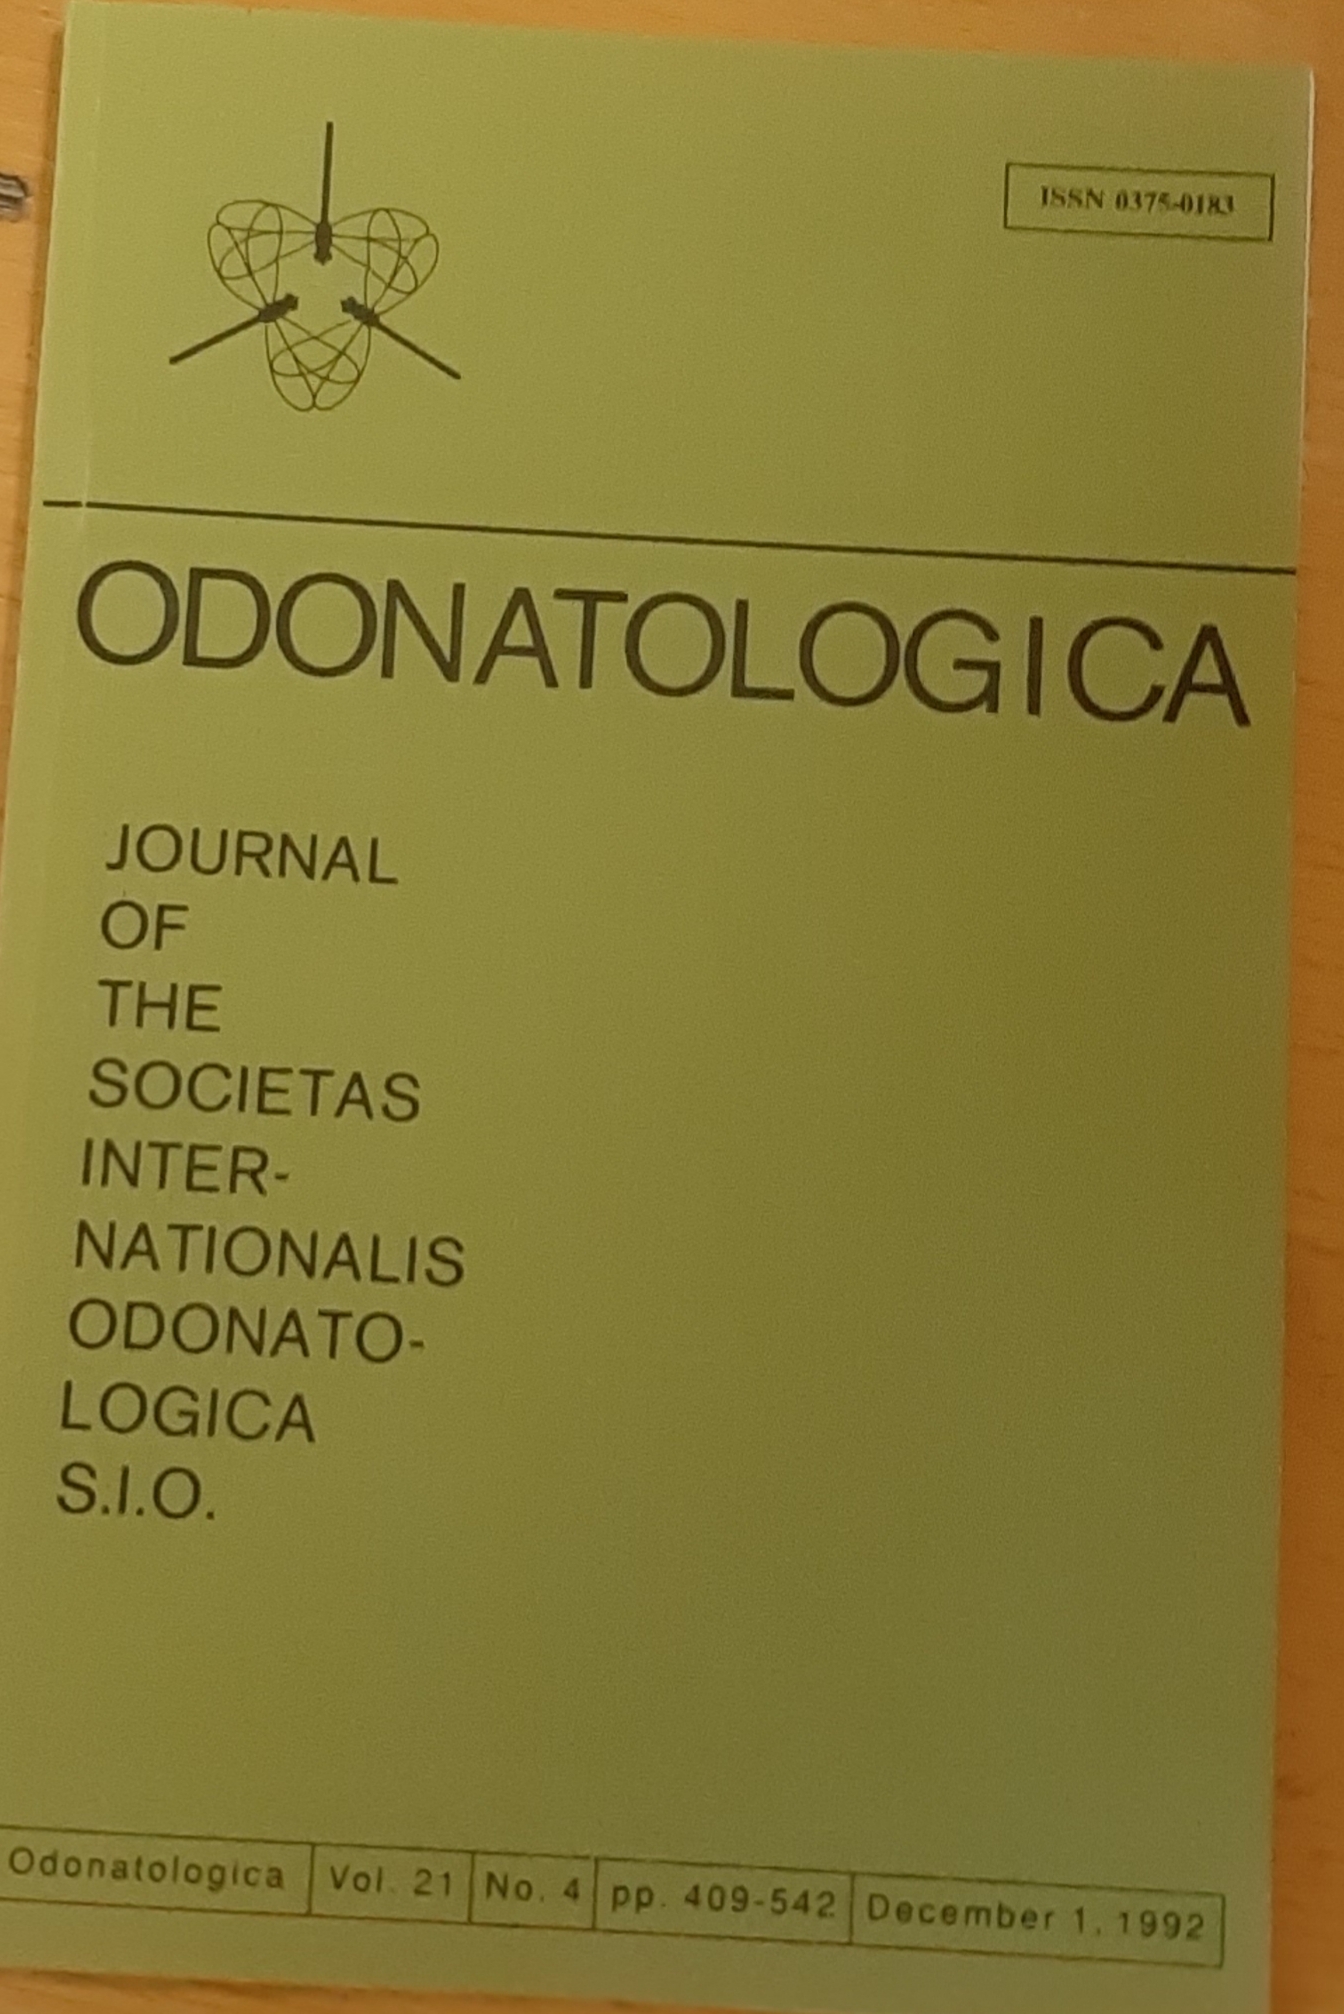 Odonatologica 1992/21. évf. 4. szám Journal of the Societas Internationalis Odonatologica S.I.O. (Rippl-Rónai Múzeum RR-F)